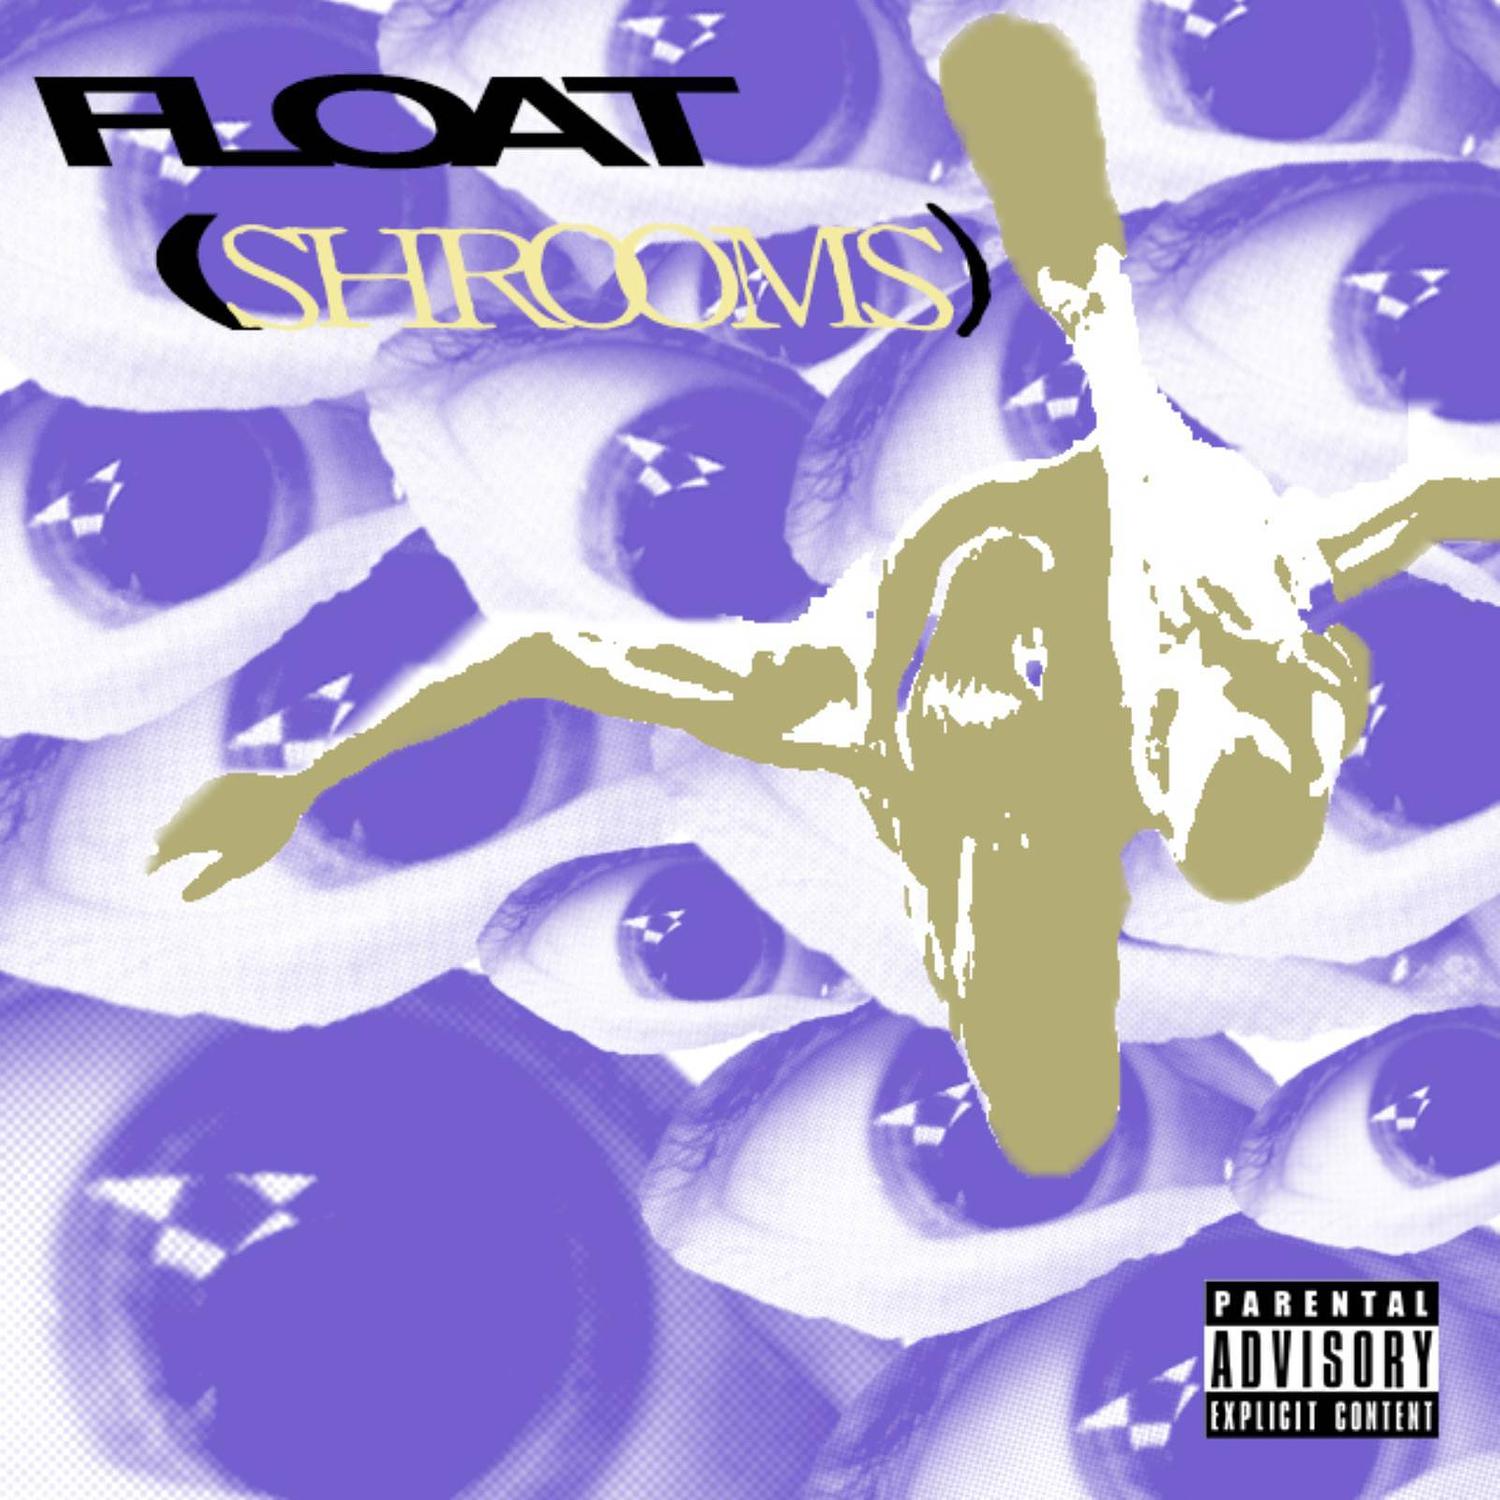 gianni - Float (Shrooms)